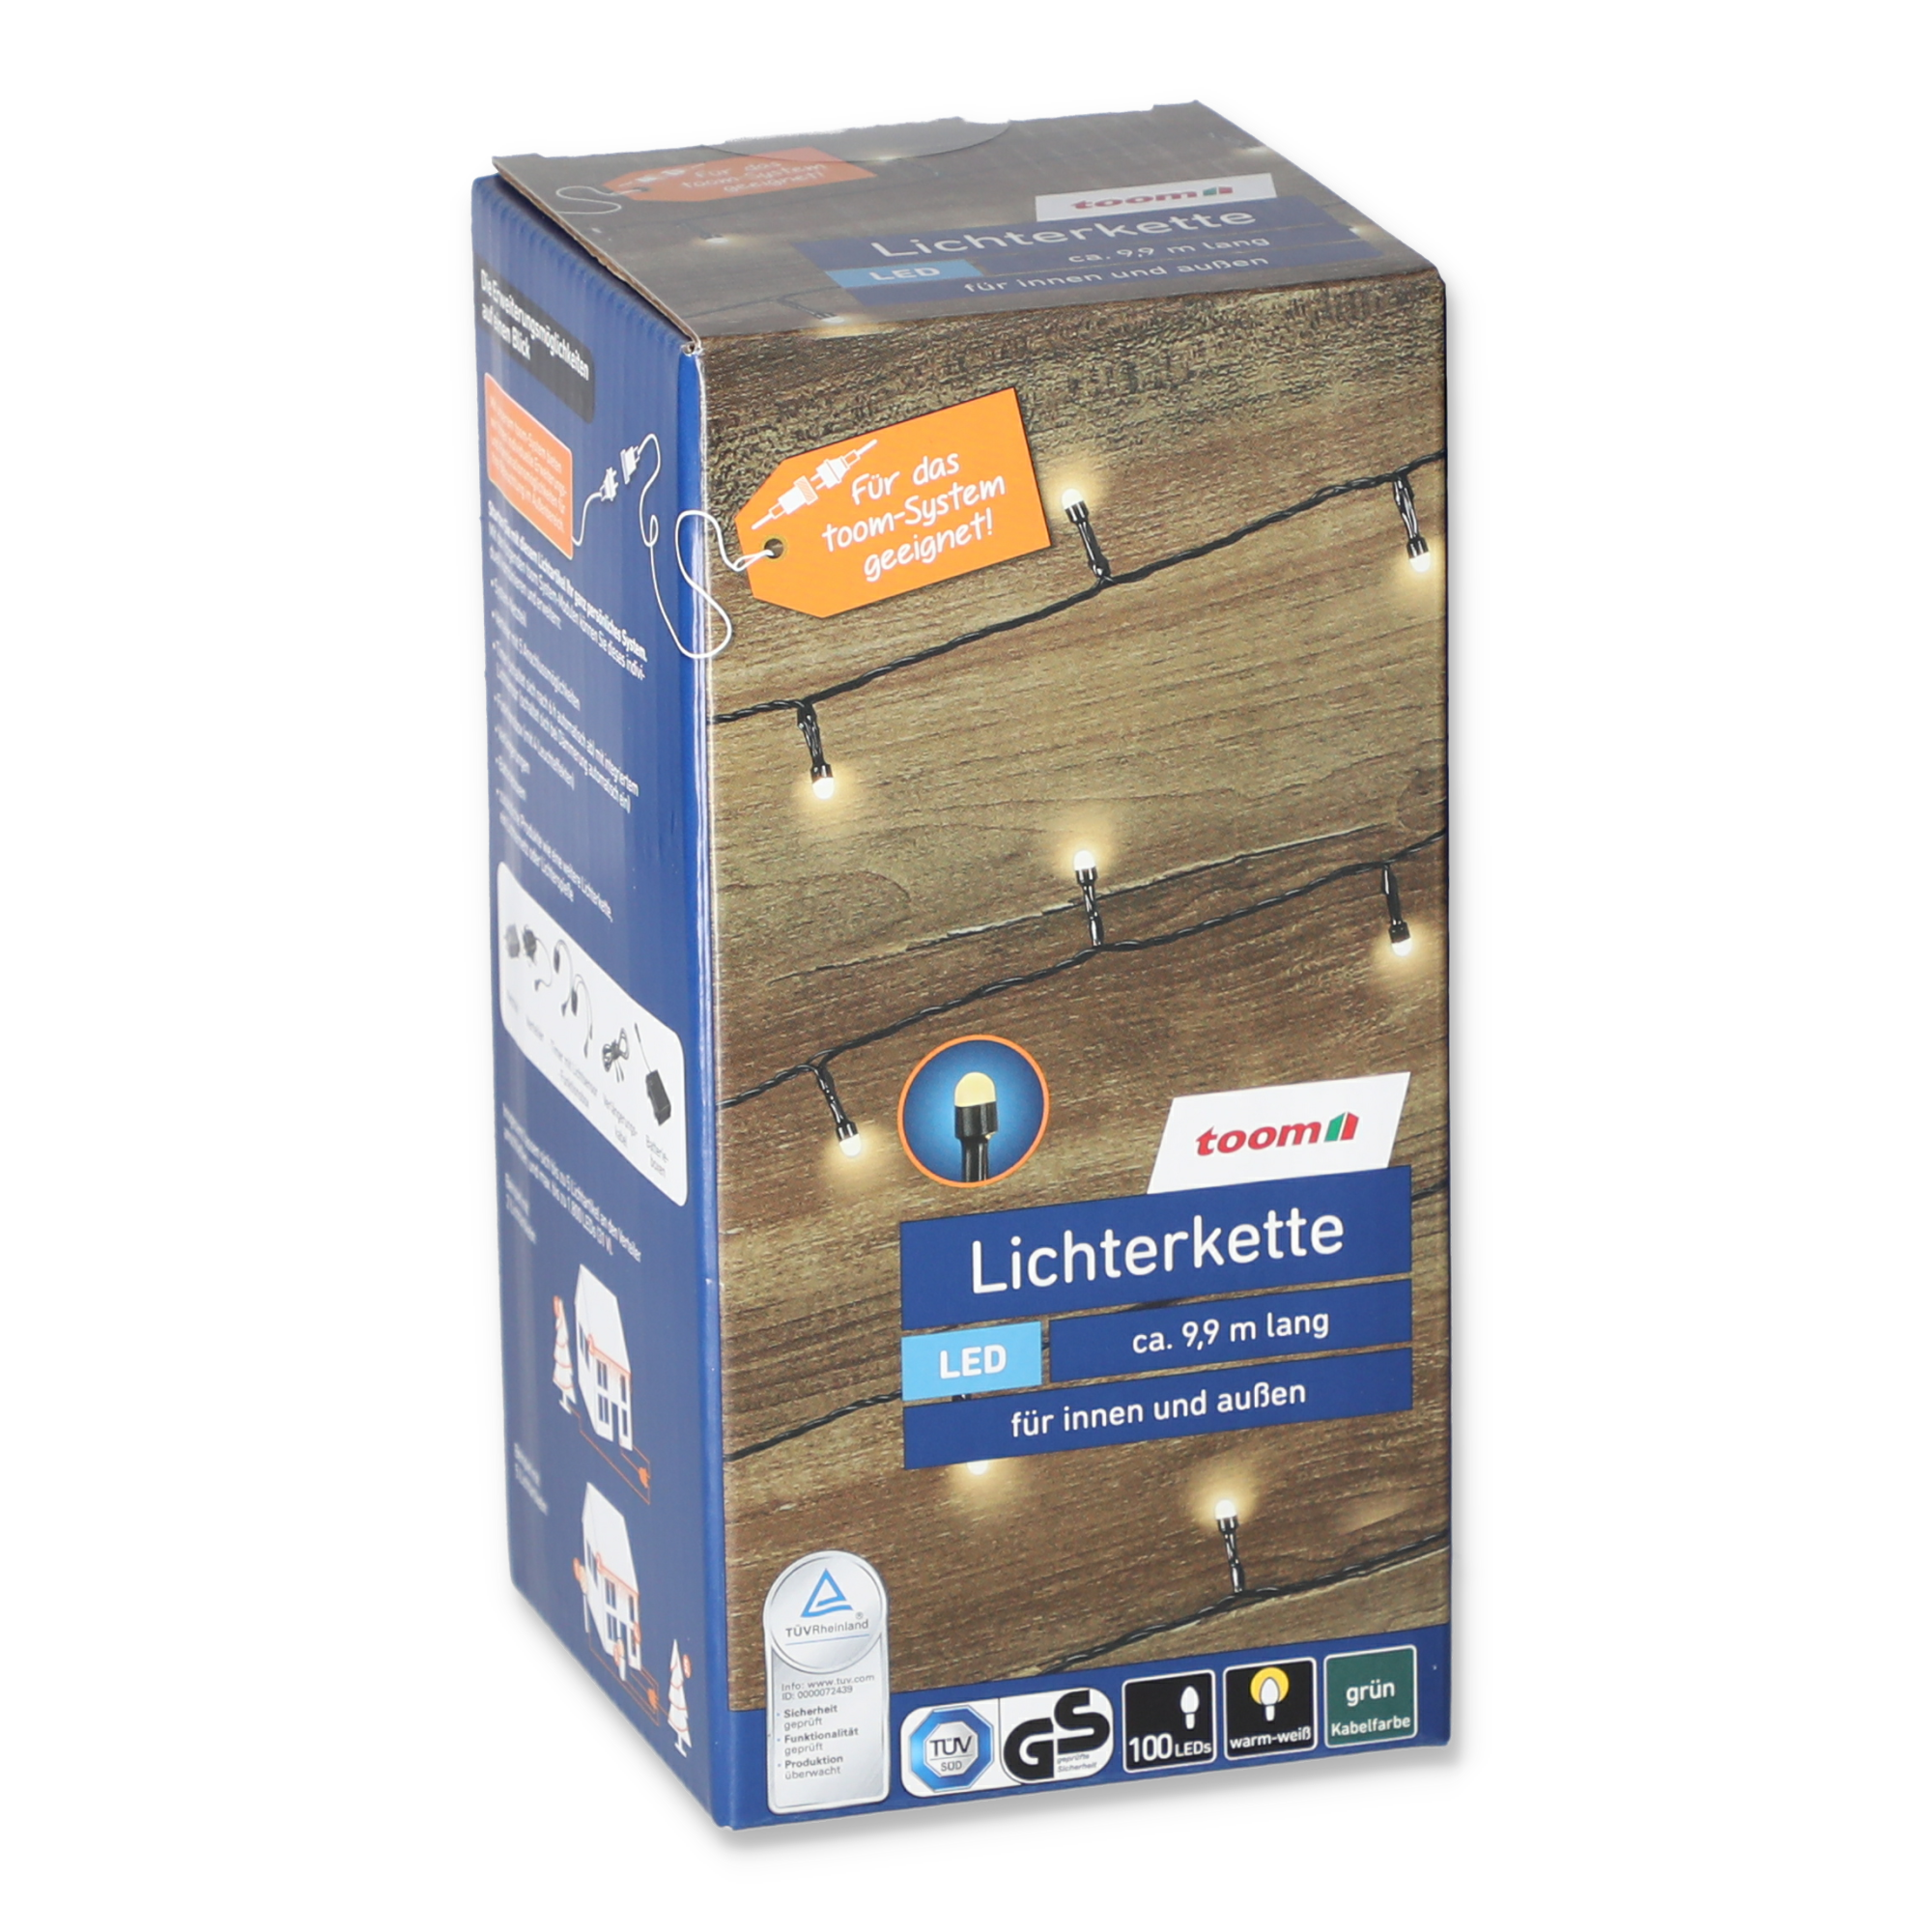 LED-Lichterkette 100 LEDs warmweiß 990 cm + product picture